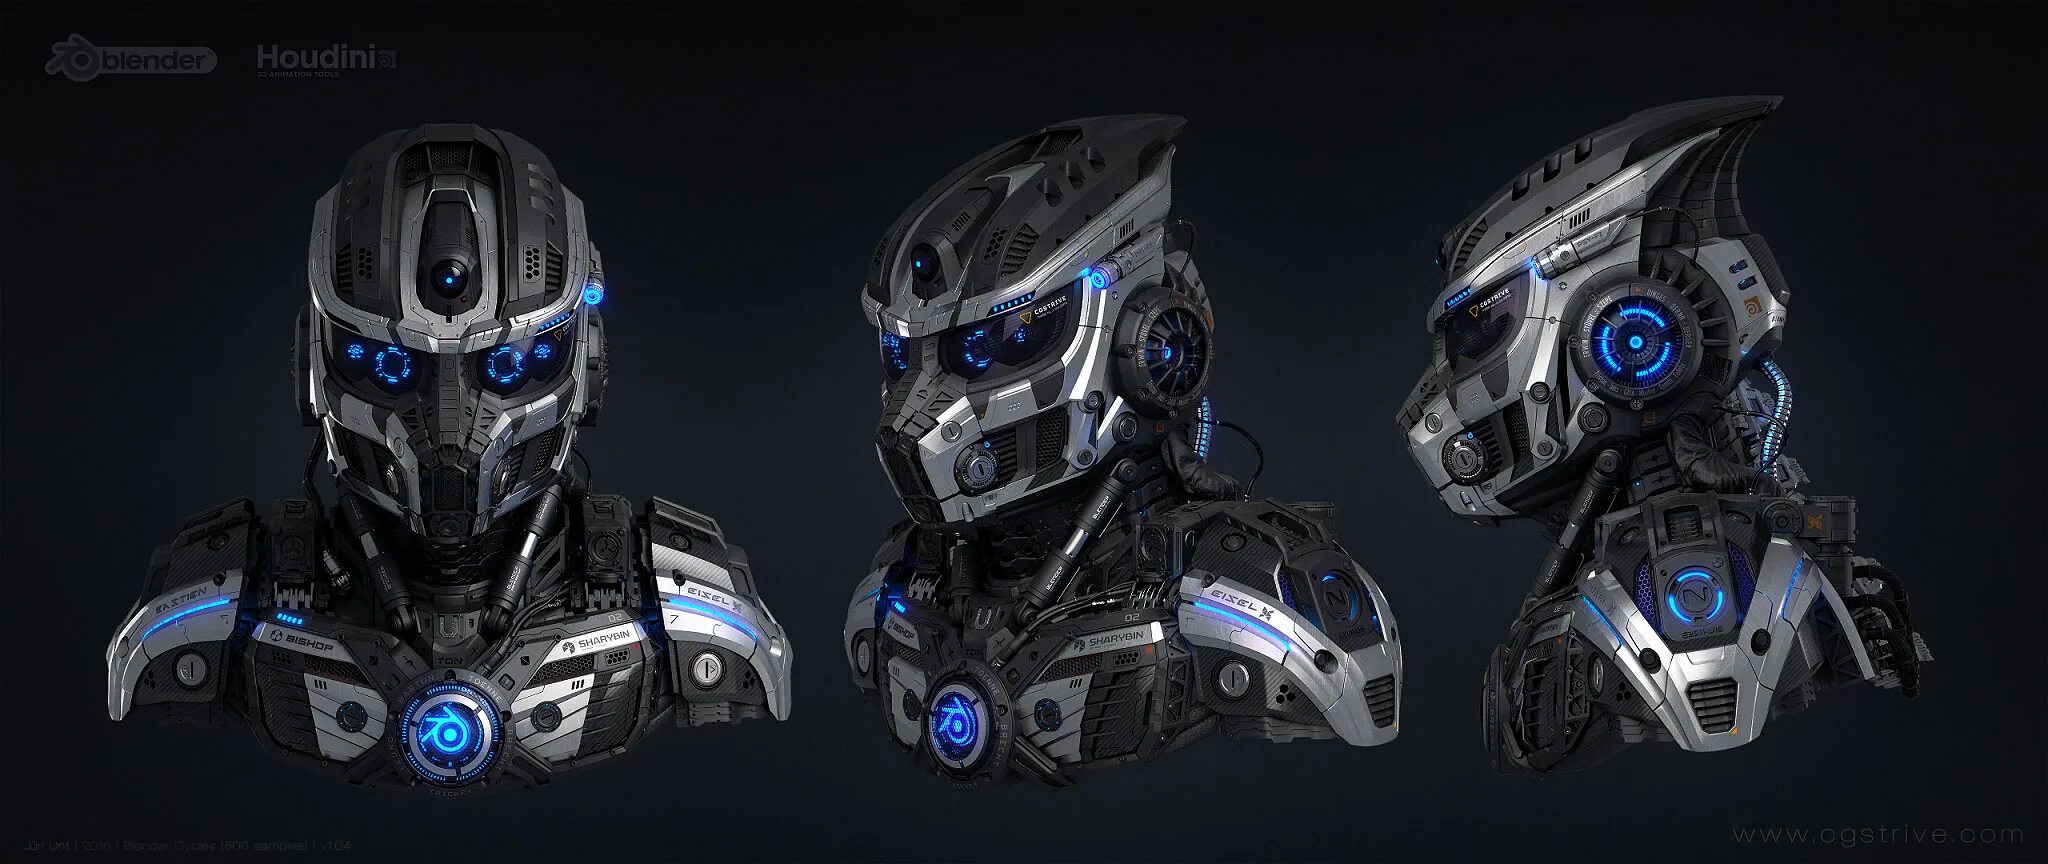 Honor r2 rob 00. Маска Sci-Fi экзо шлемы. Блендер 3д scifi. Крутые роботы. Робот концепт.